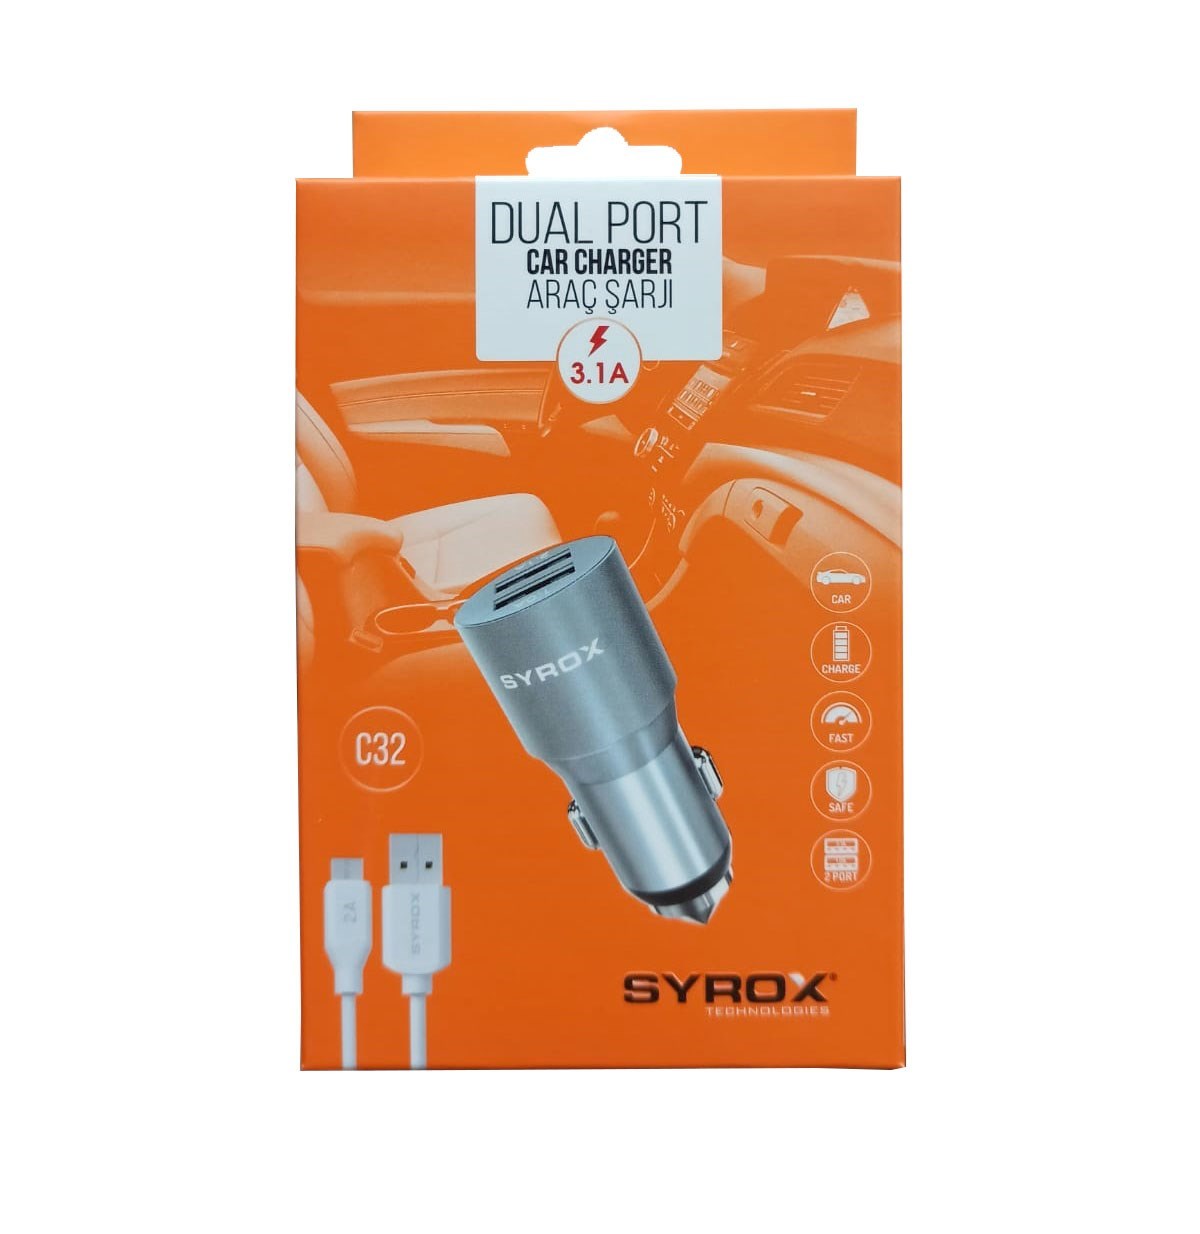 SYROX DUAL USB PORT CAR CHARGER 3.1A C32